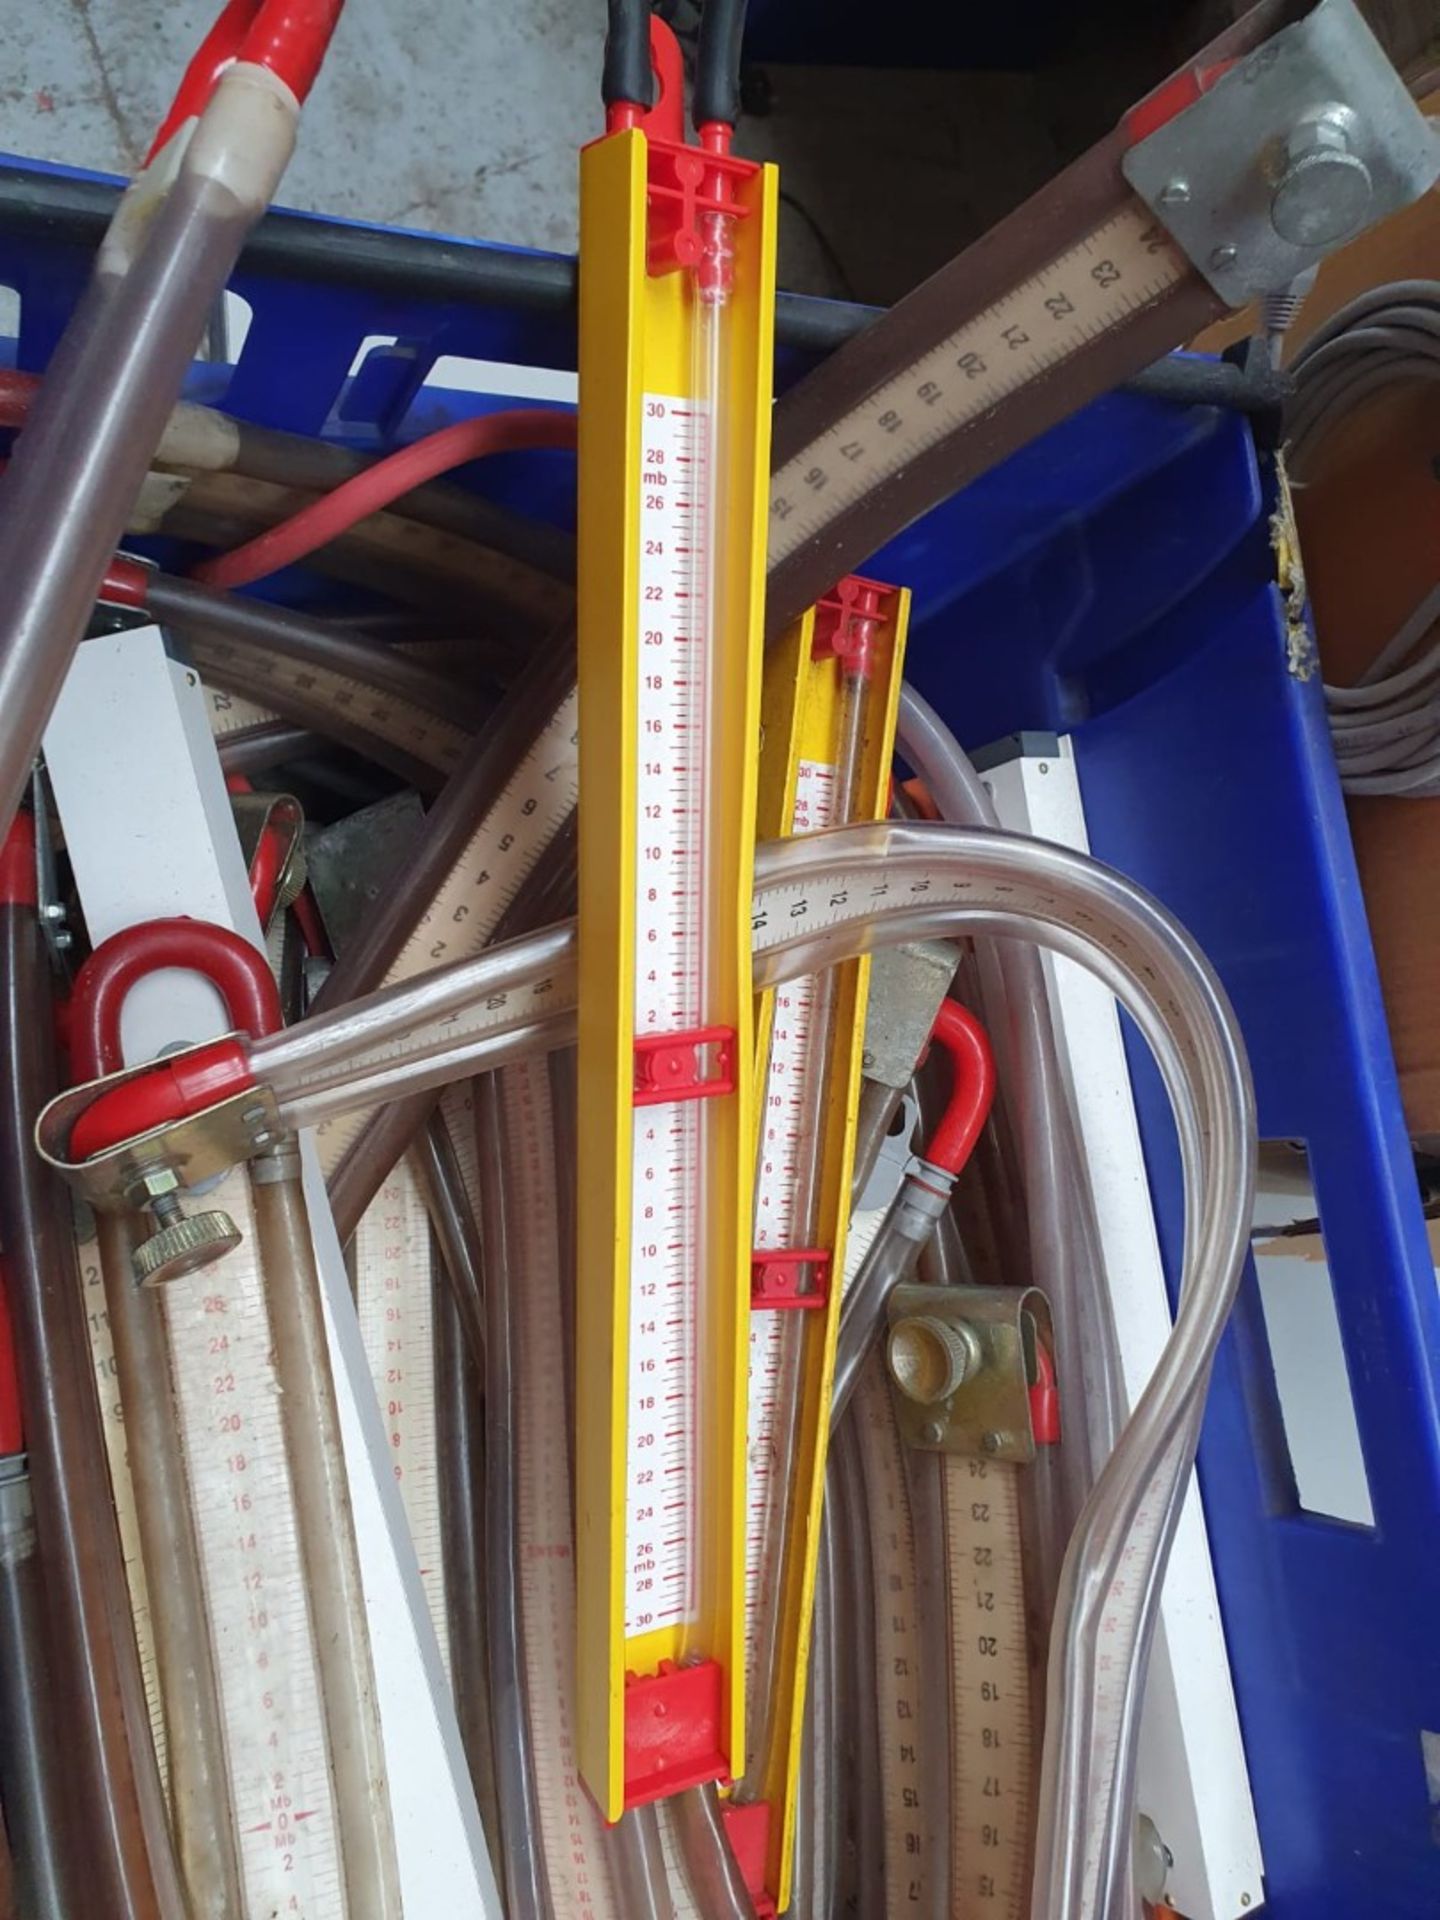 Job Lot Of U-Gauge Manometer / Pressure Measuring Instruments - Pre-owned Items - Low Start - Image 3 of 4